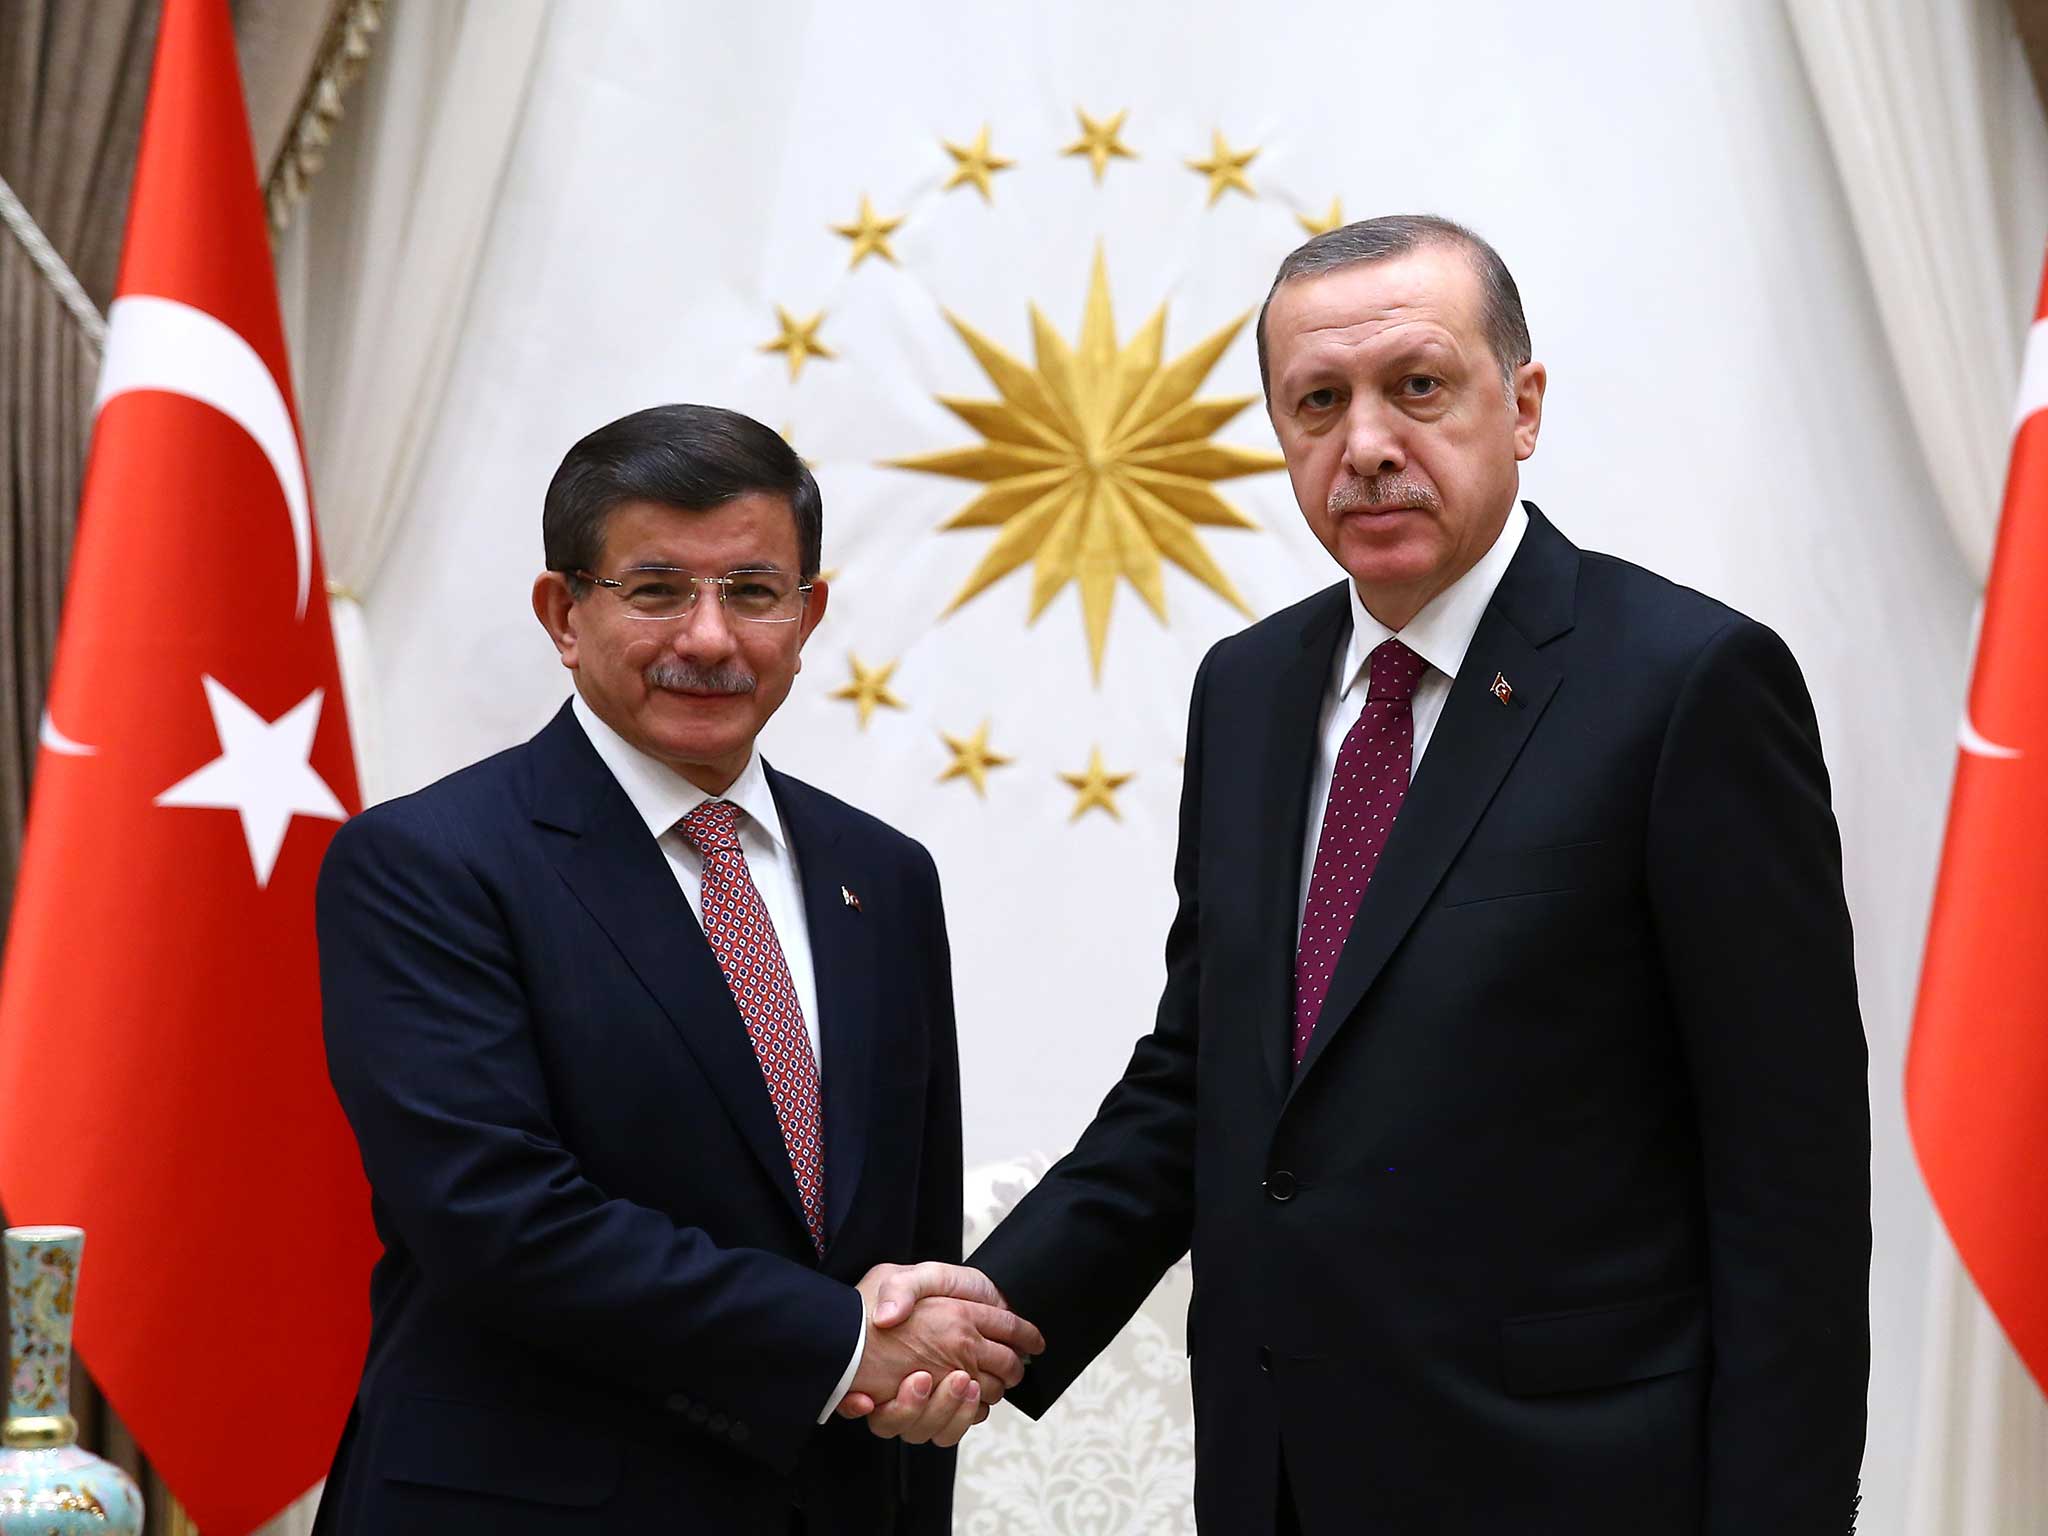 President Erdogan with his former Prime Minister Ahmed Davutoglu